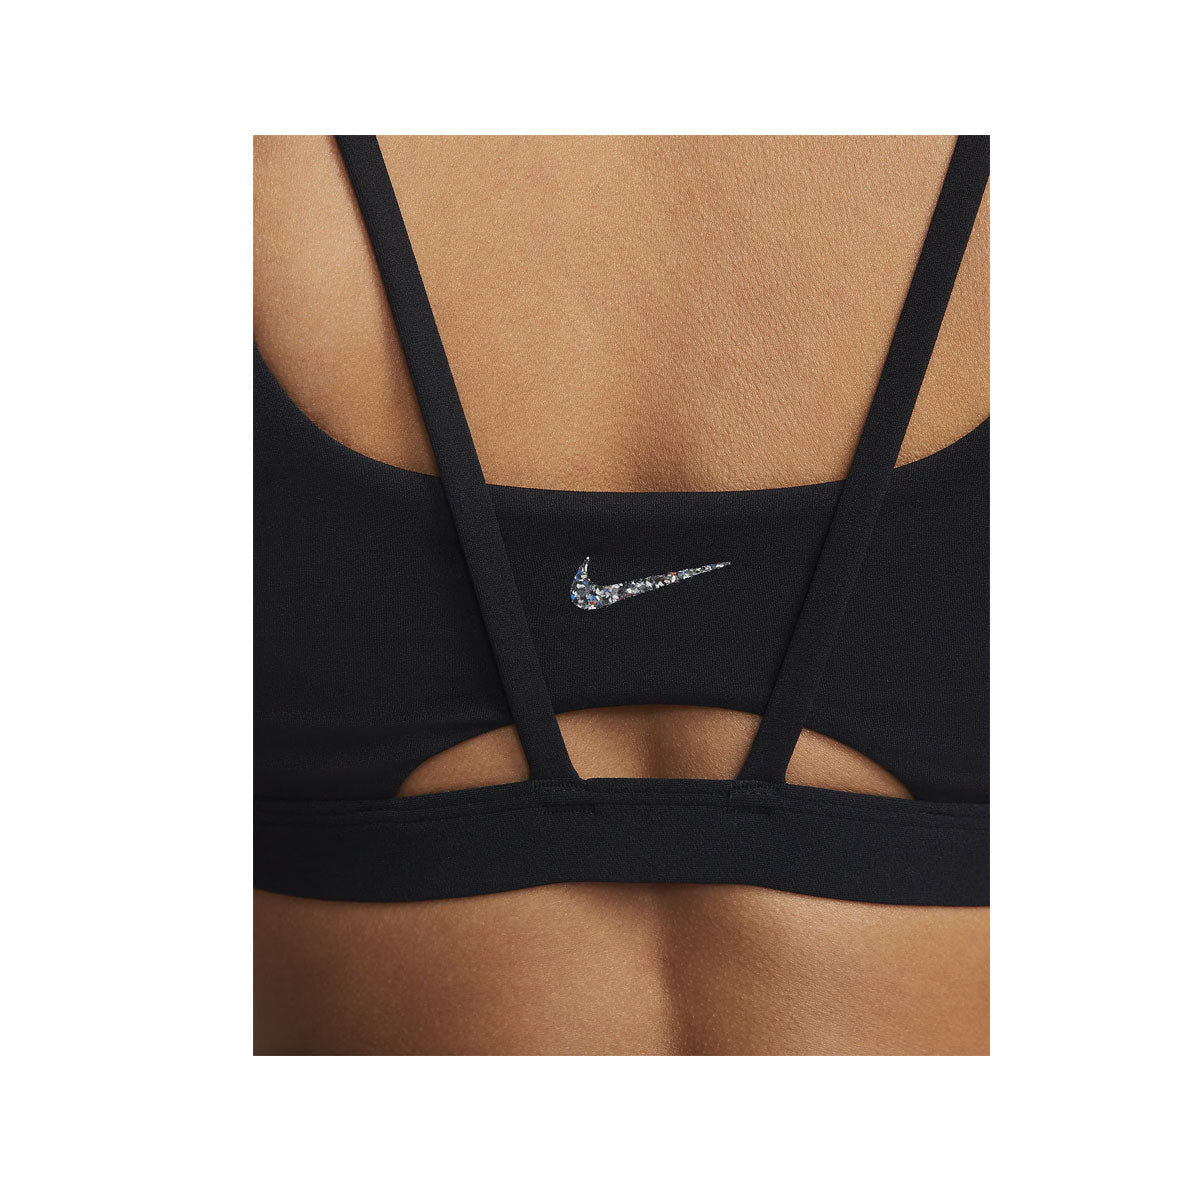 Nike Women's Light-Support Padded Strappy Bra